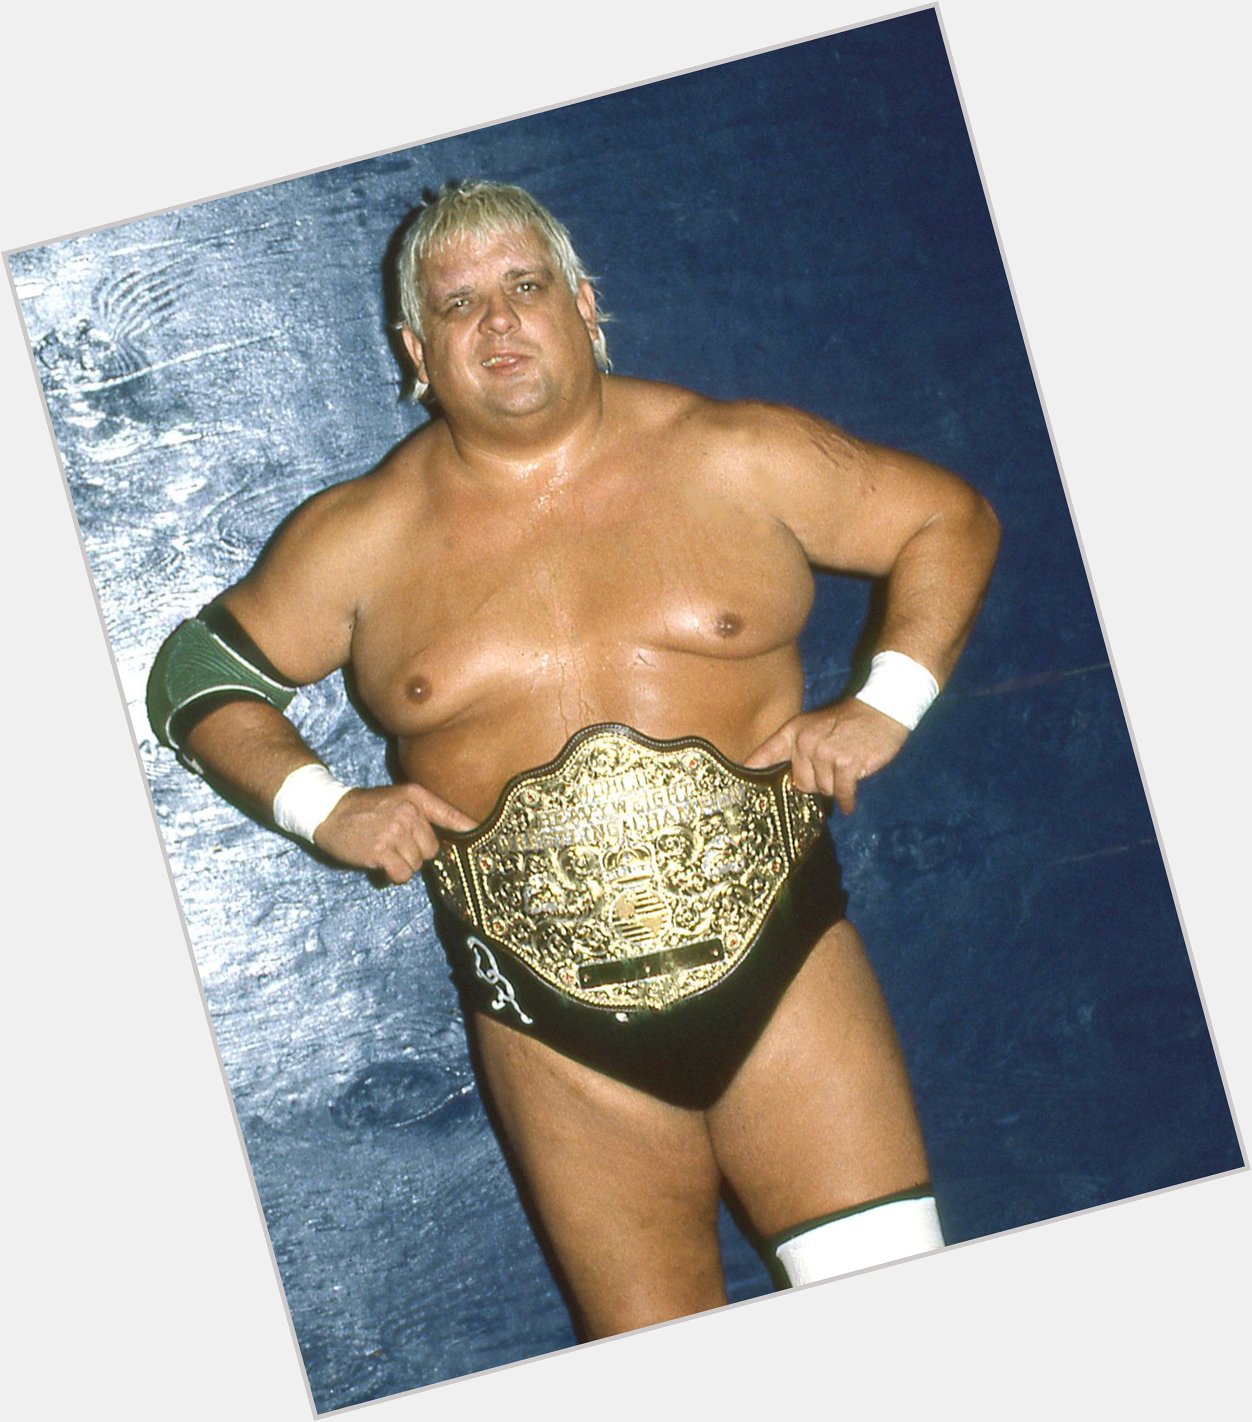 Happy Birthday to Professional Wresting Legend, The American Dream Dusty Rhodes. 